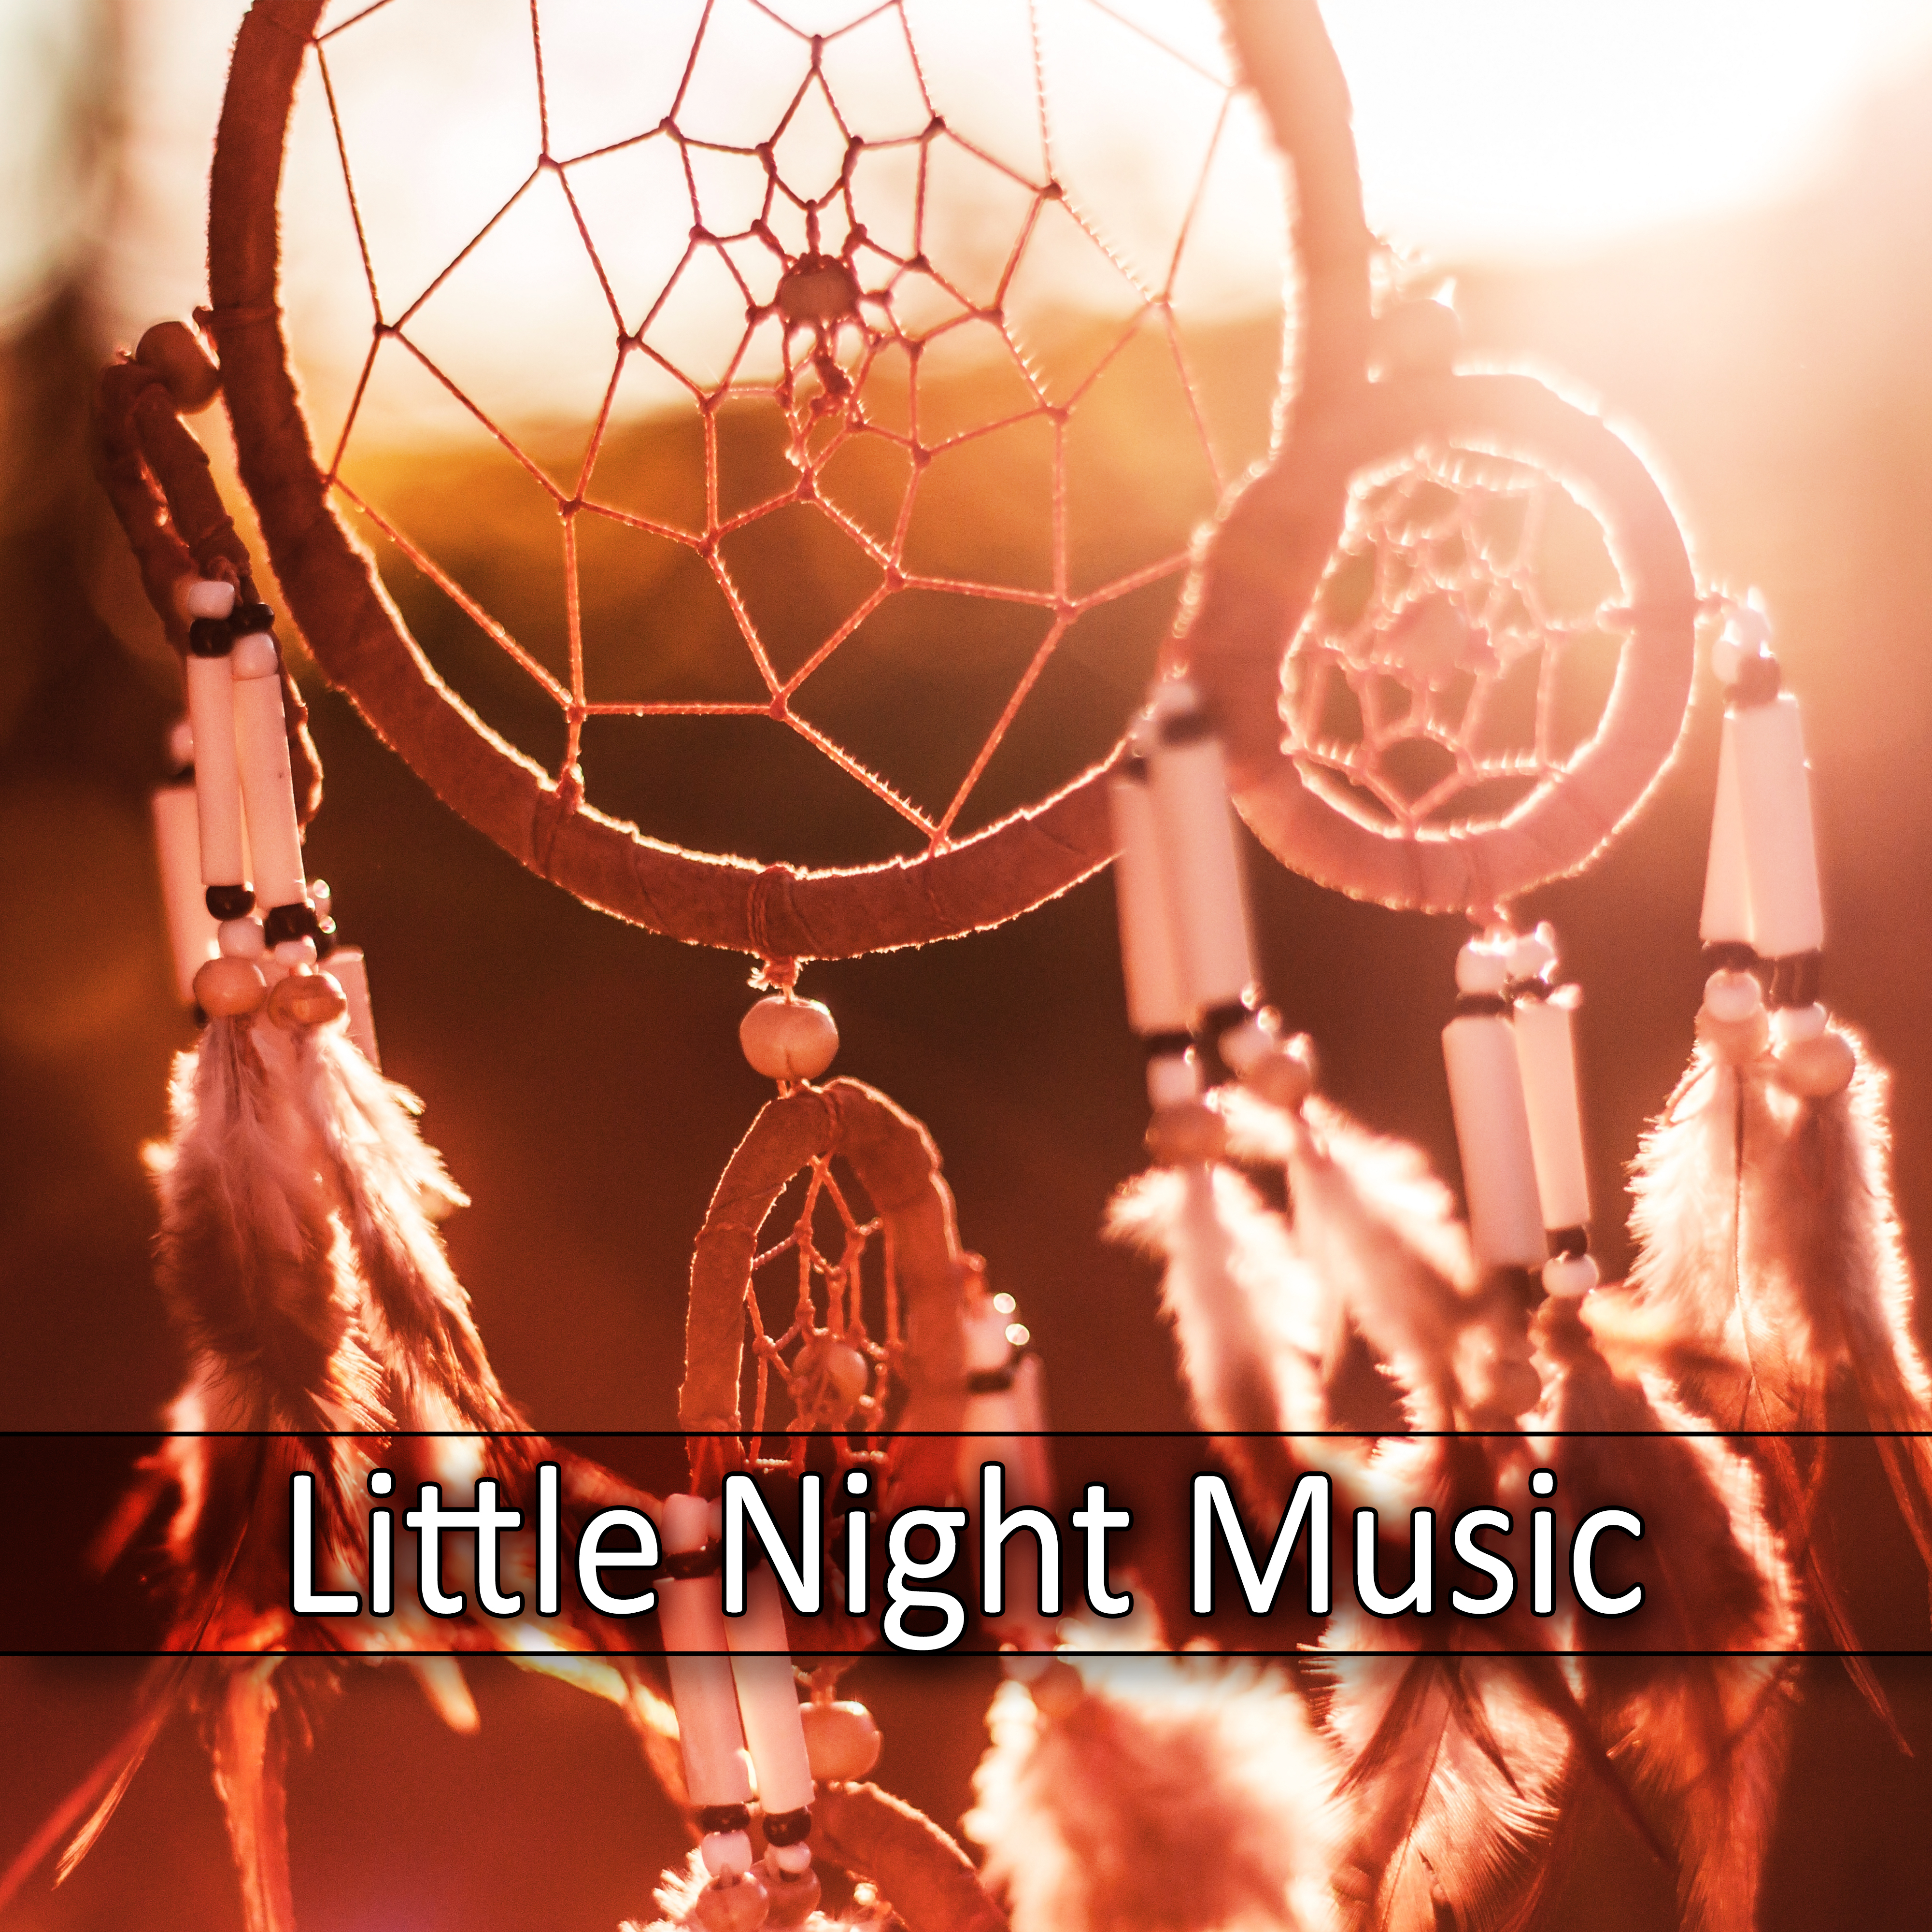 Little Night Music – Night Music, Sleep Training, Bedtime Routine, Sleep Aids, Baby Lullaby, Soft Piano Music, Baby Sleep, Sweet Dreams, Sleep Tight, Emotional Music, Mom and Baby